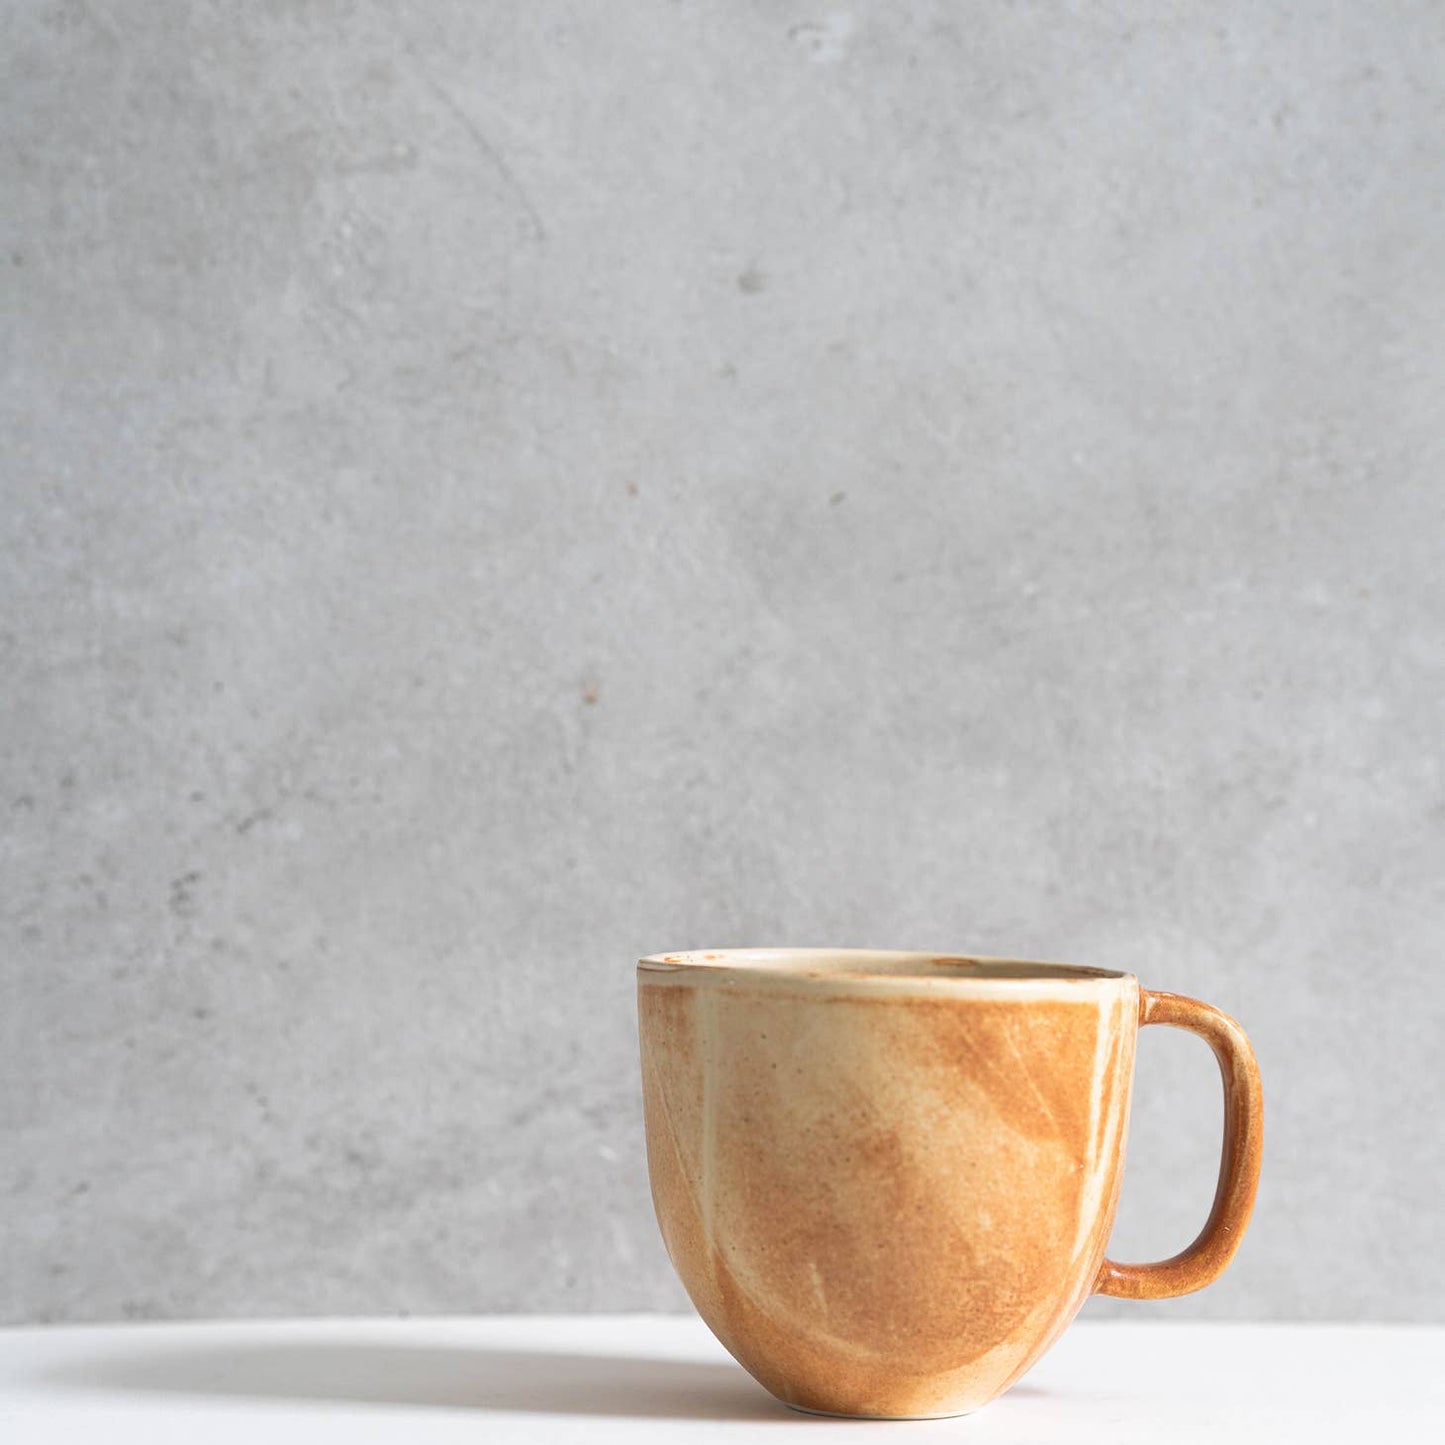 Ethical Trade Co Tabletop Coffee Mug / Caramel Handmade Ukrainian Stoneware Coffee Cup